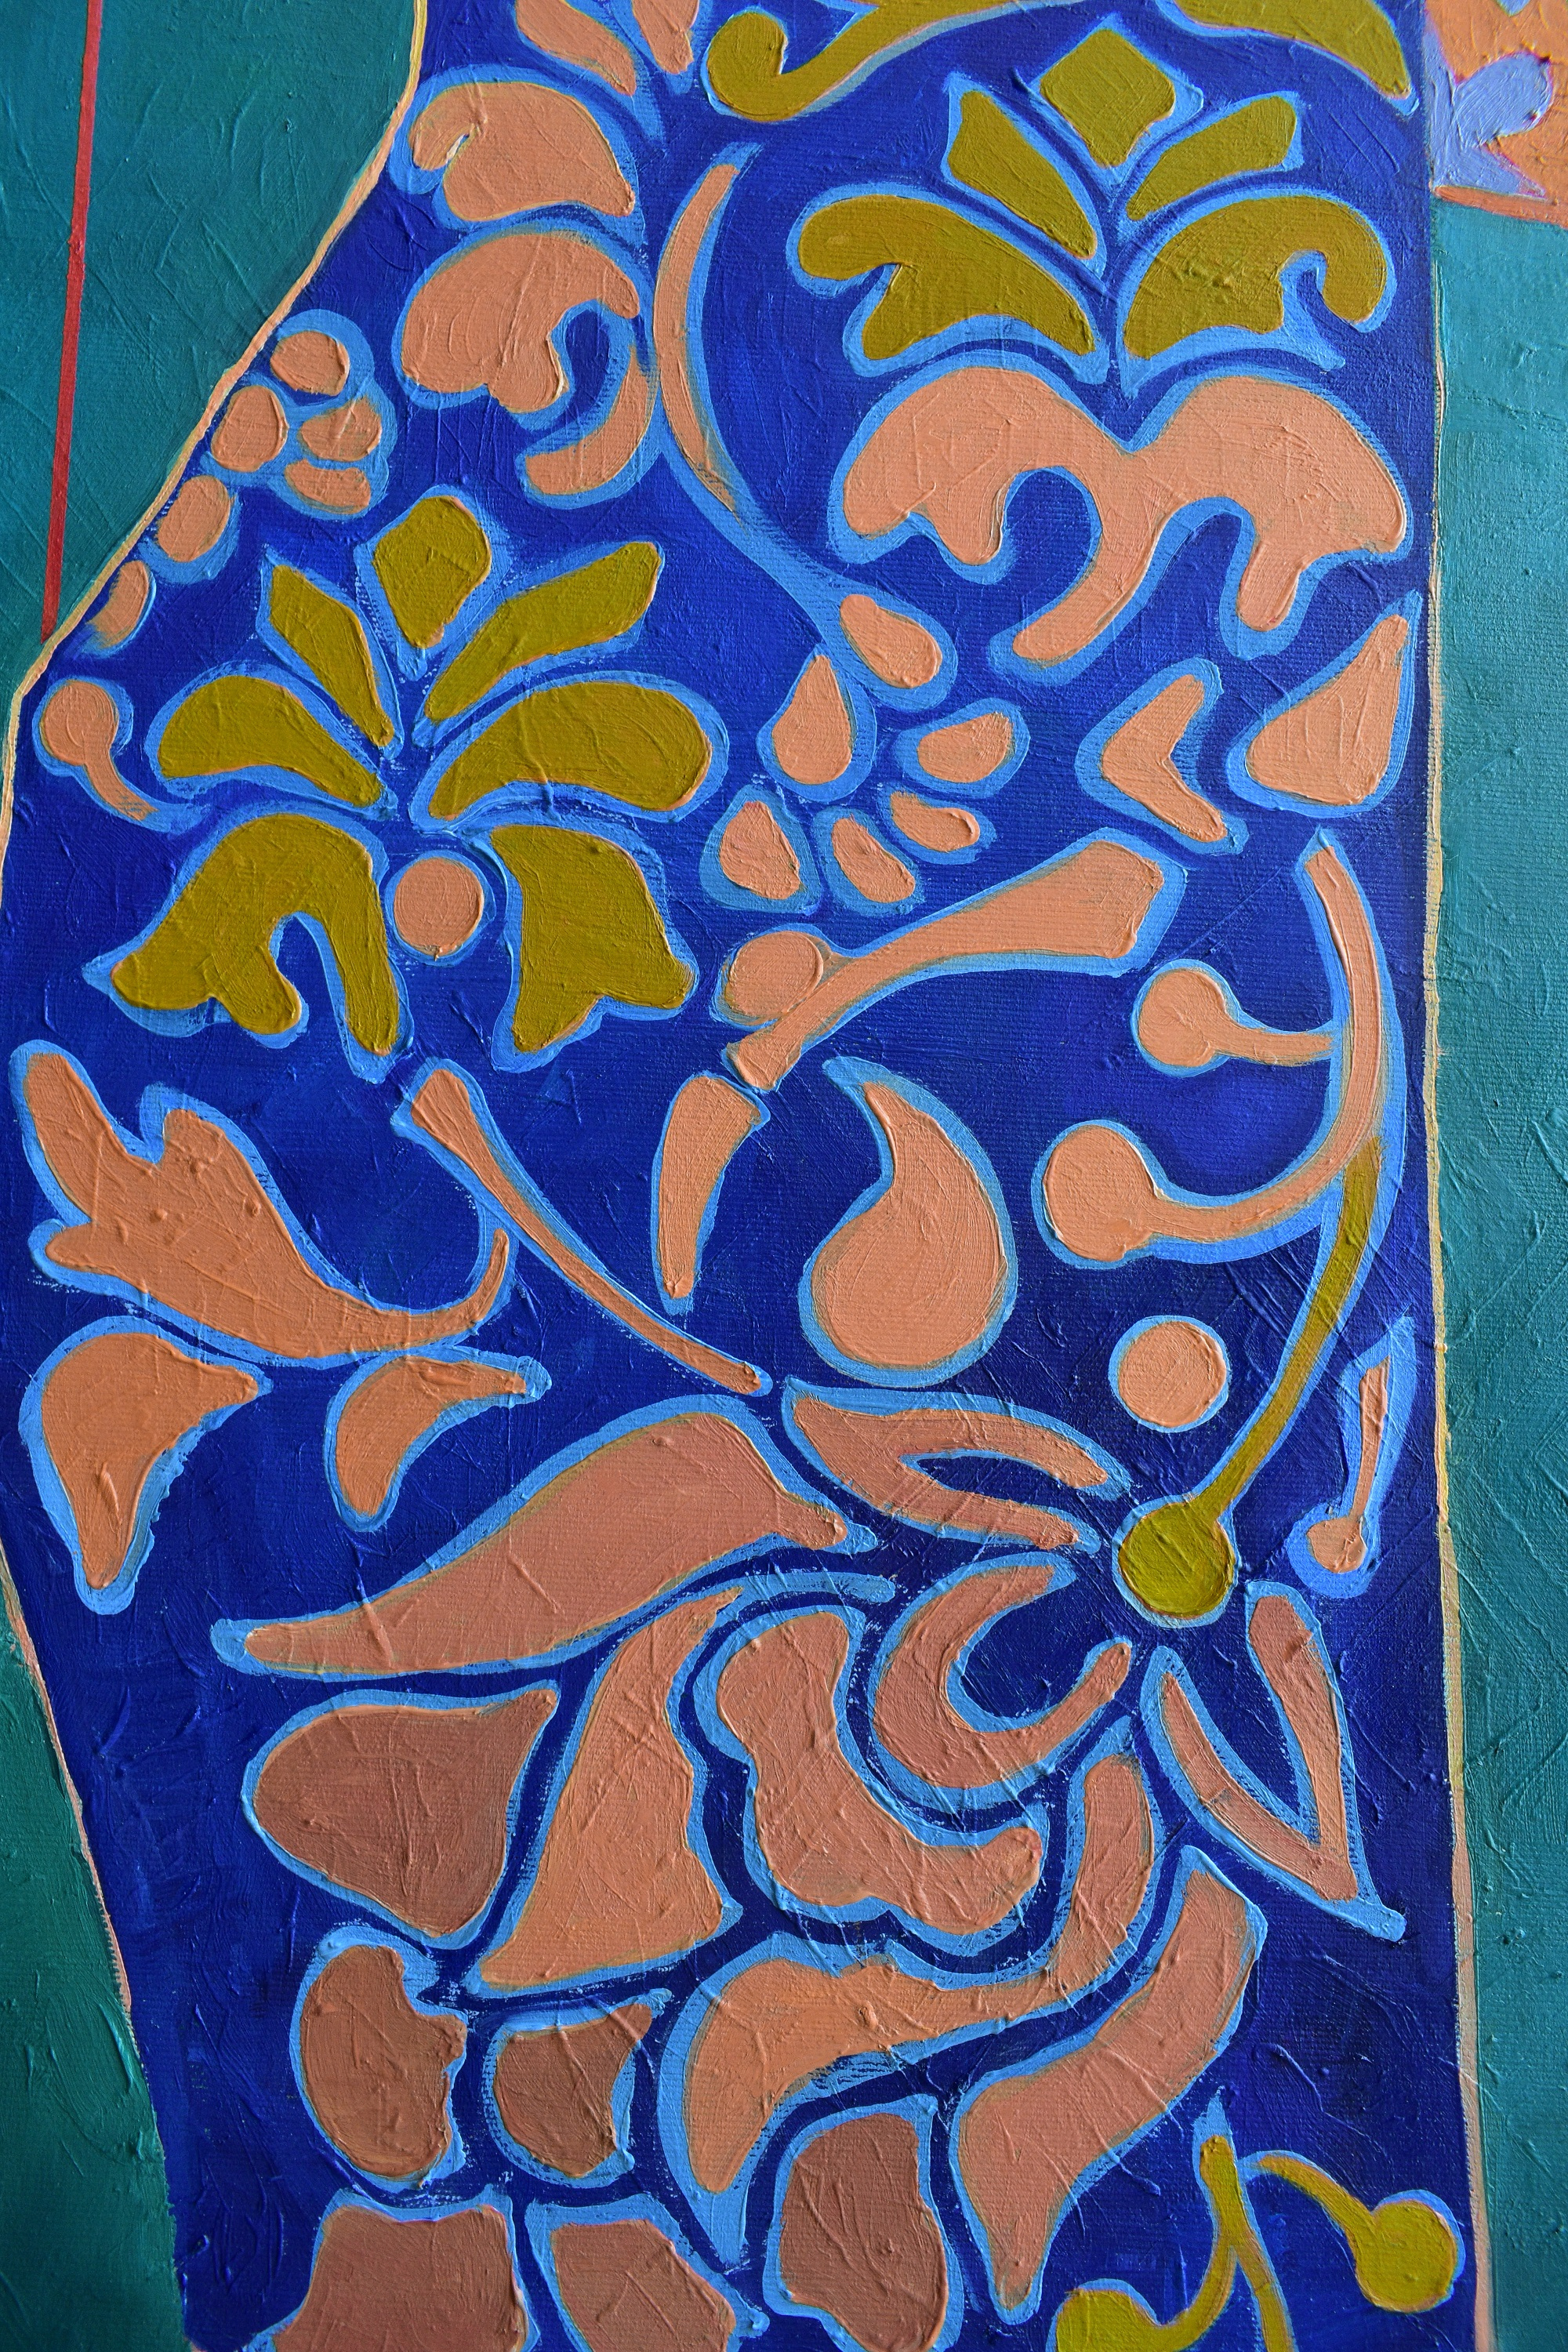 Painting by Marina Venediktova FLOWERS IN THE MIRROR detail